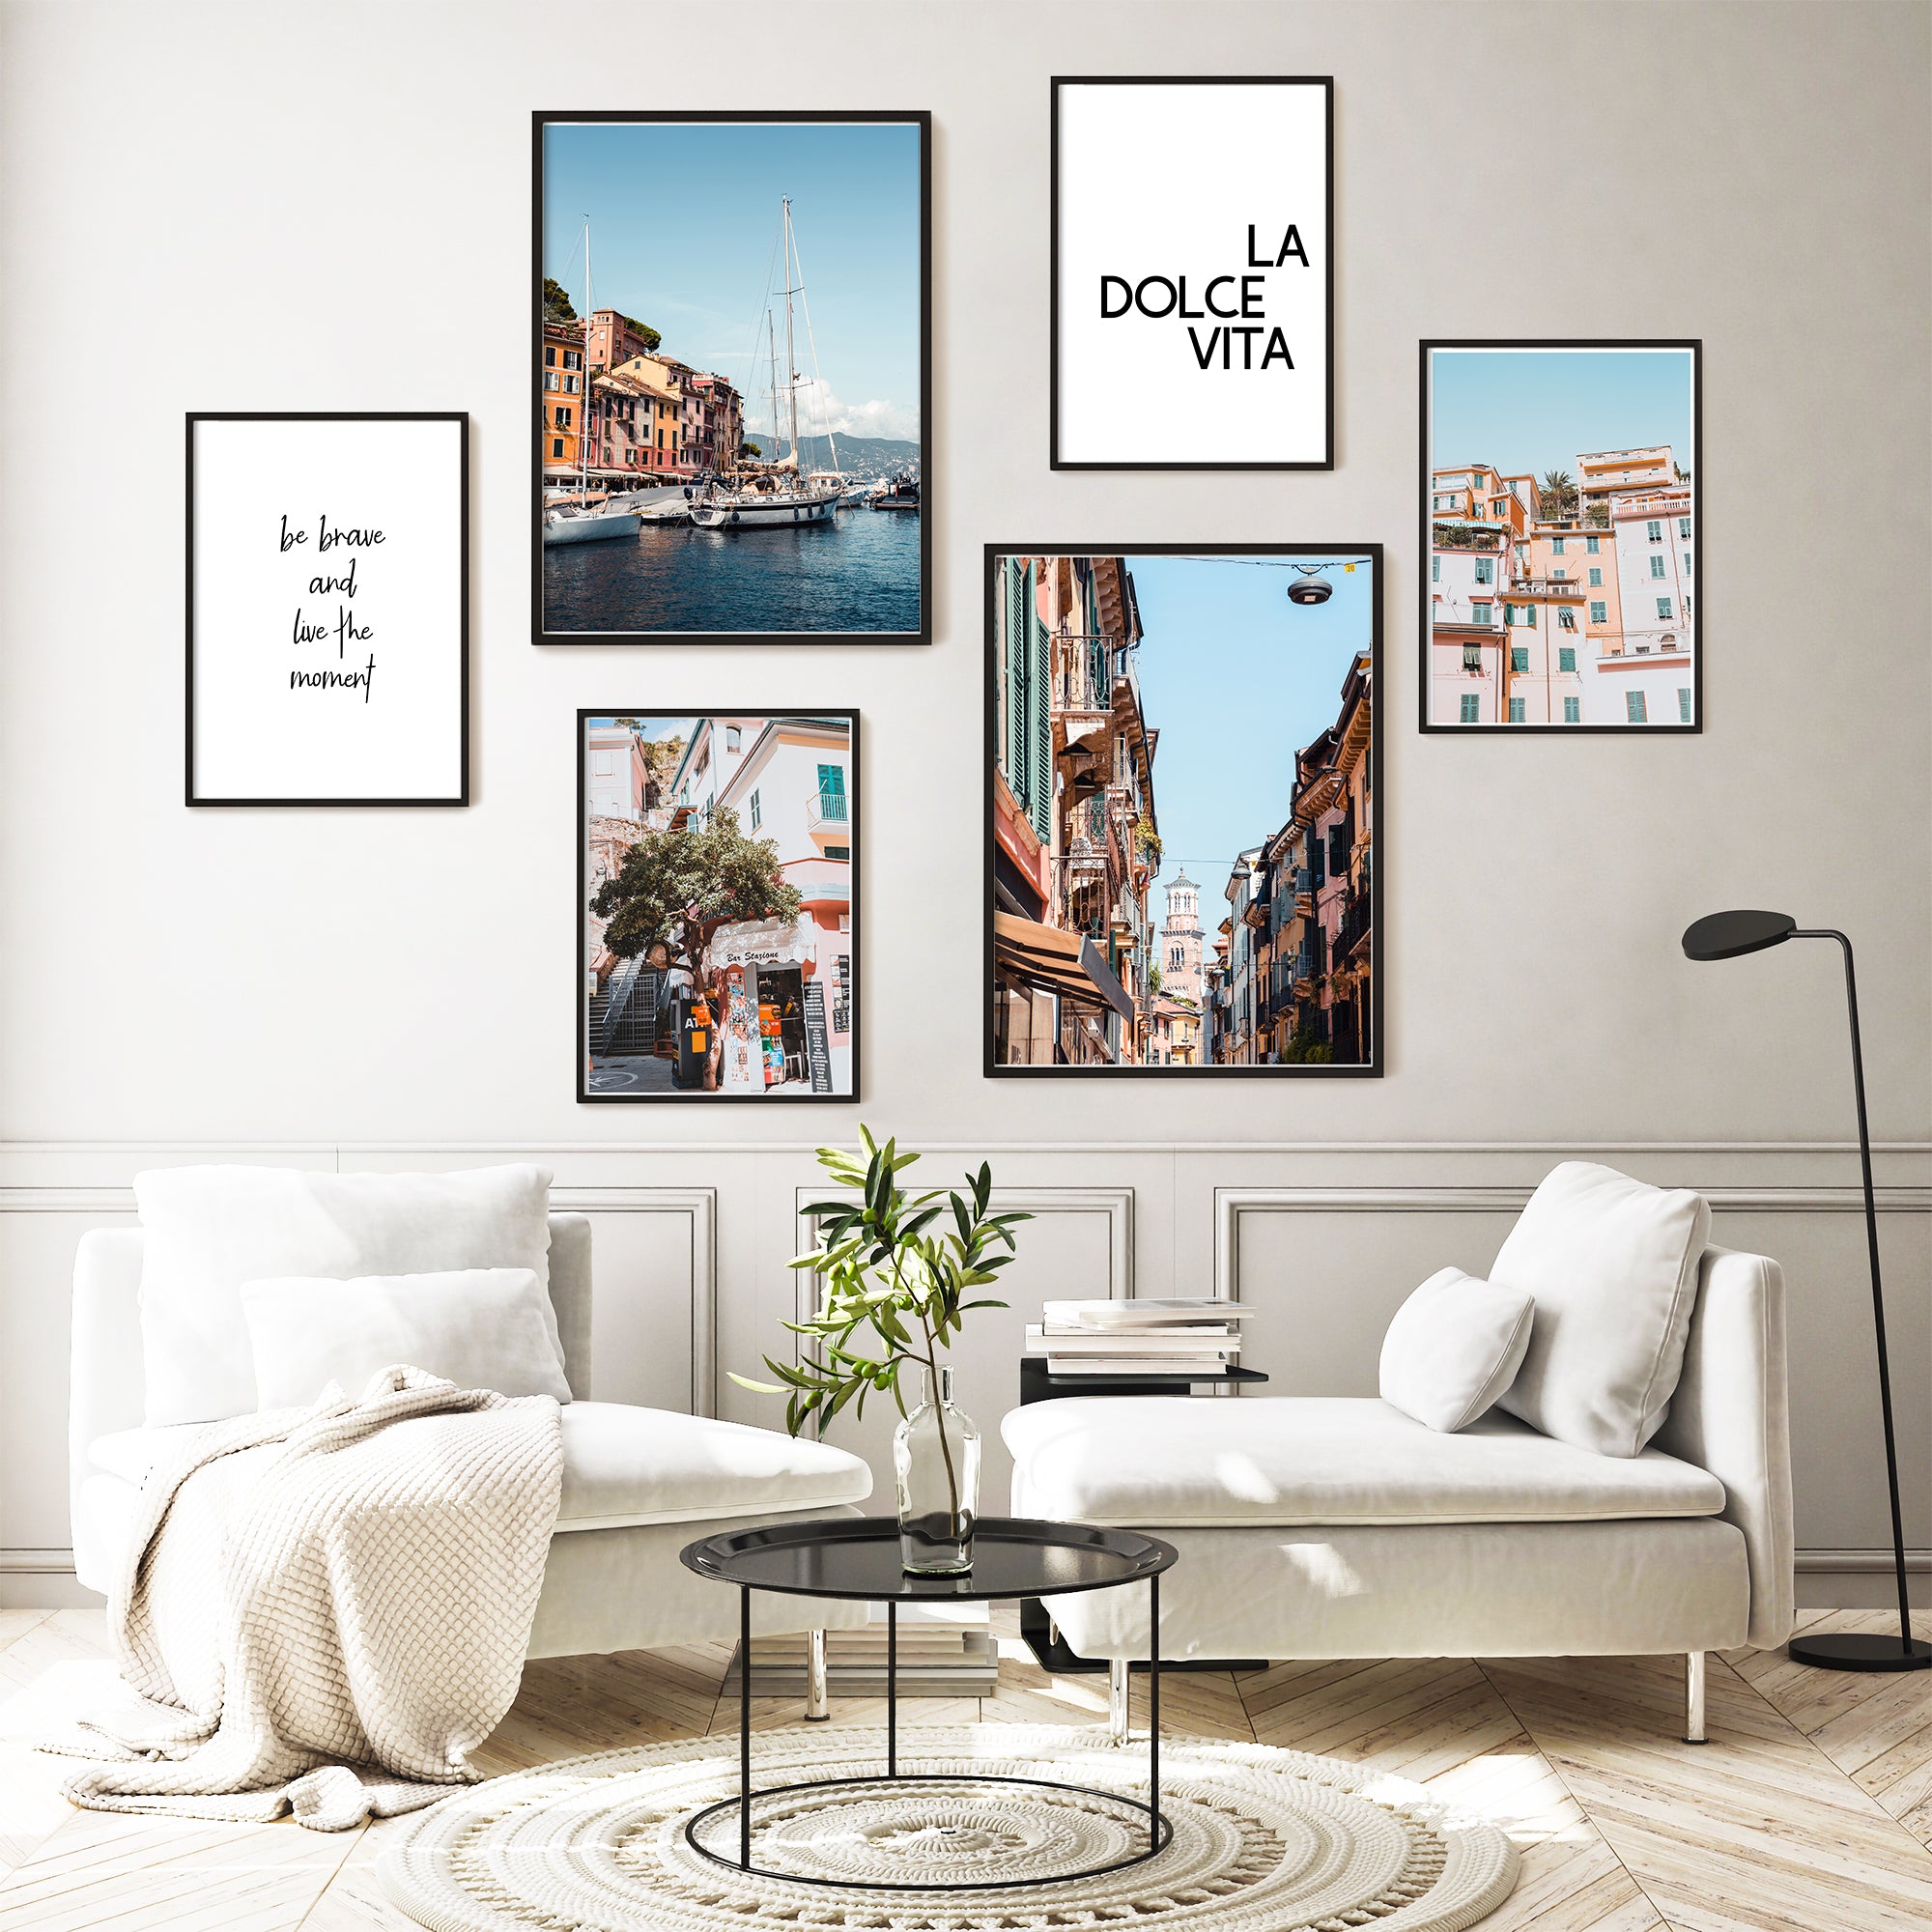 4one-Pictures-Poster-Set-Wohnzimmer-Natur-Italien-Spruch-meer-urlaub-bilderwand_0a729ea2-b3dd-40e6-a89d-d6adcd0cd613.jpg